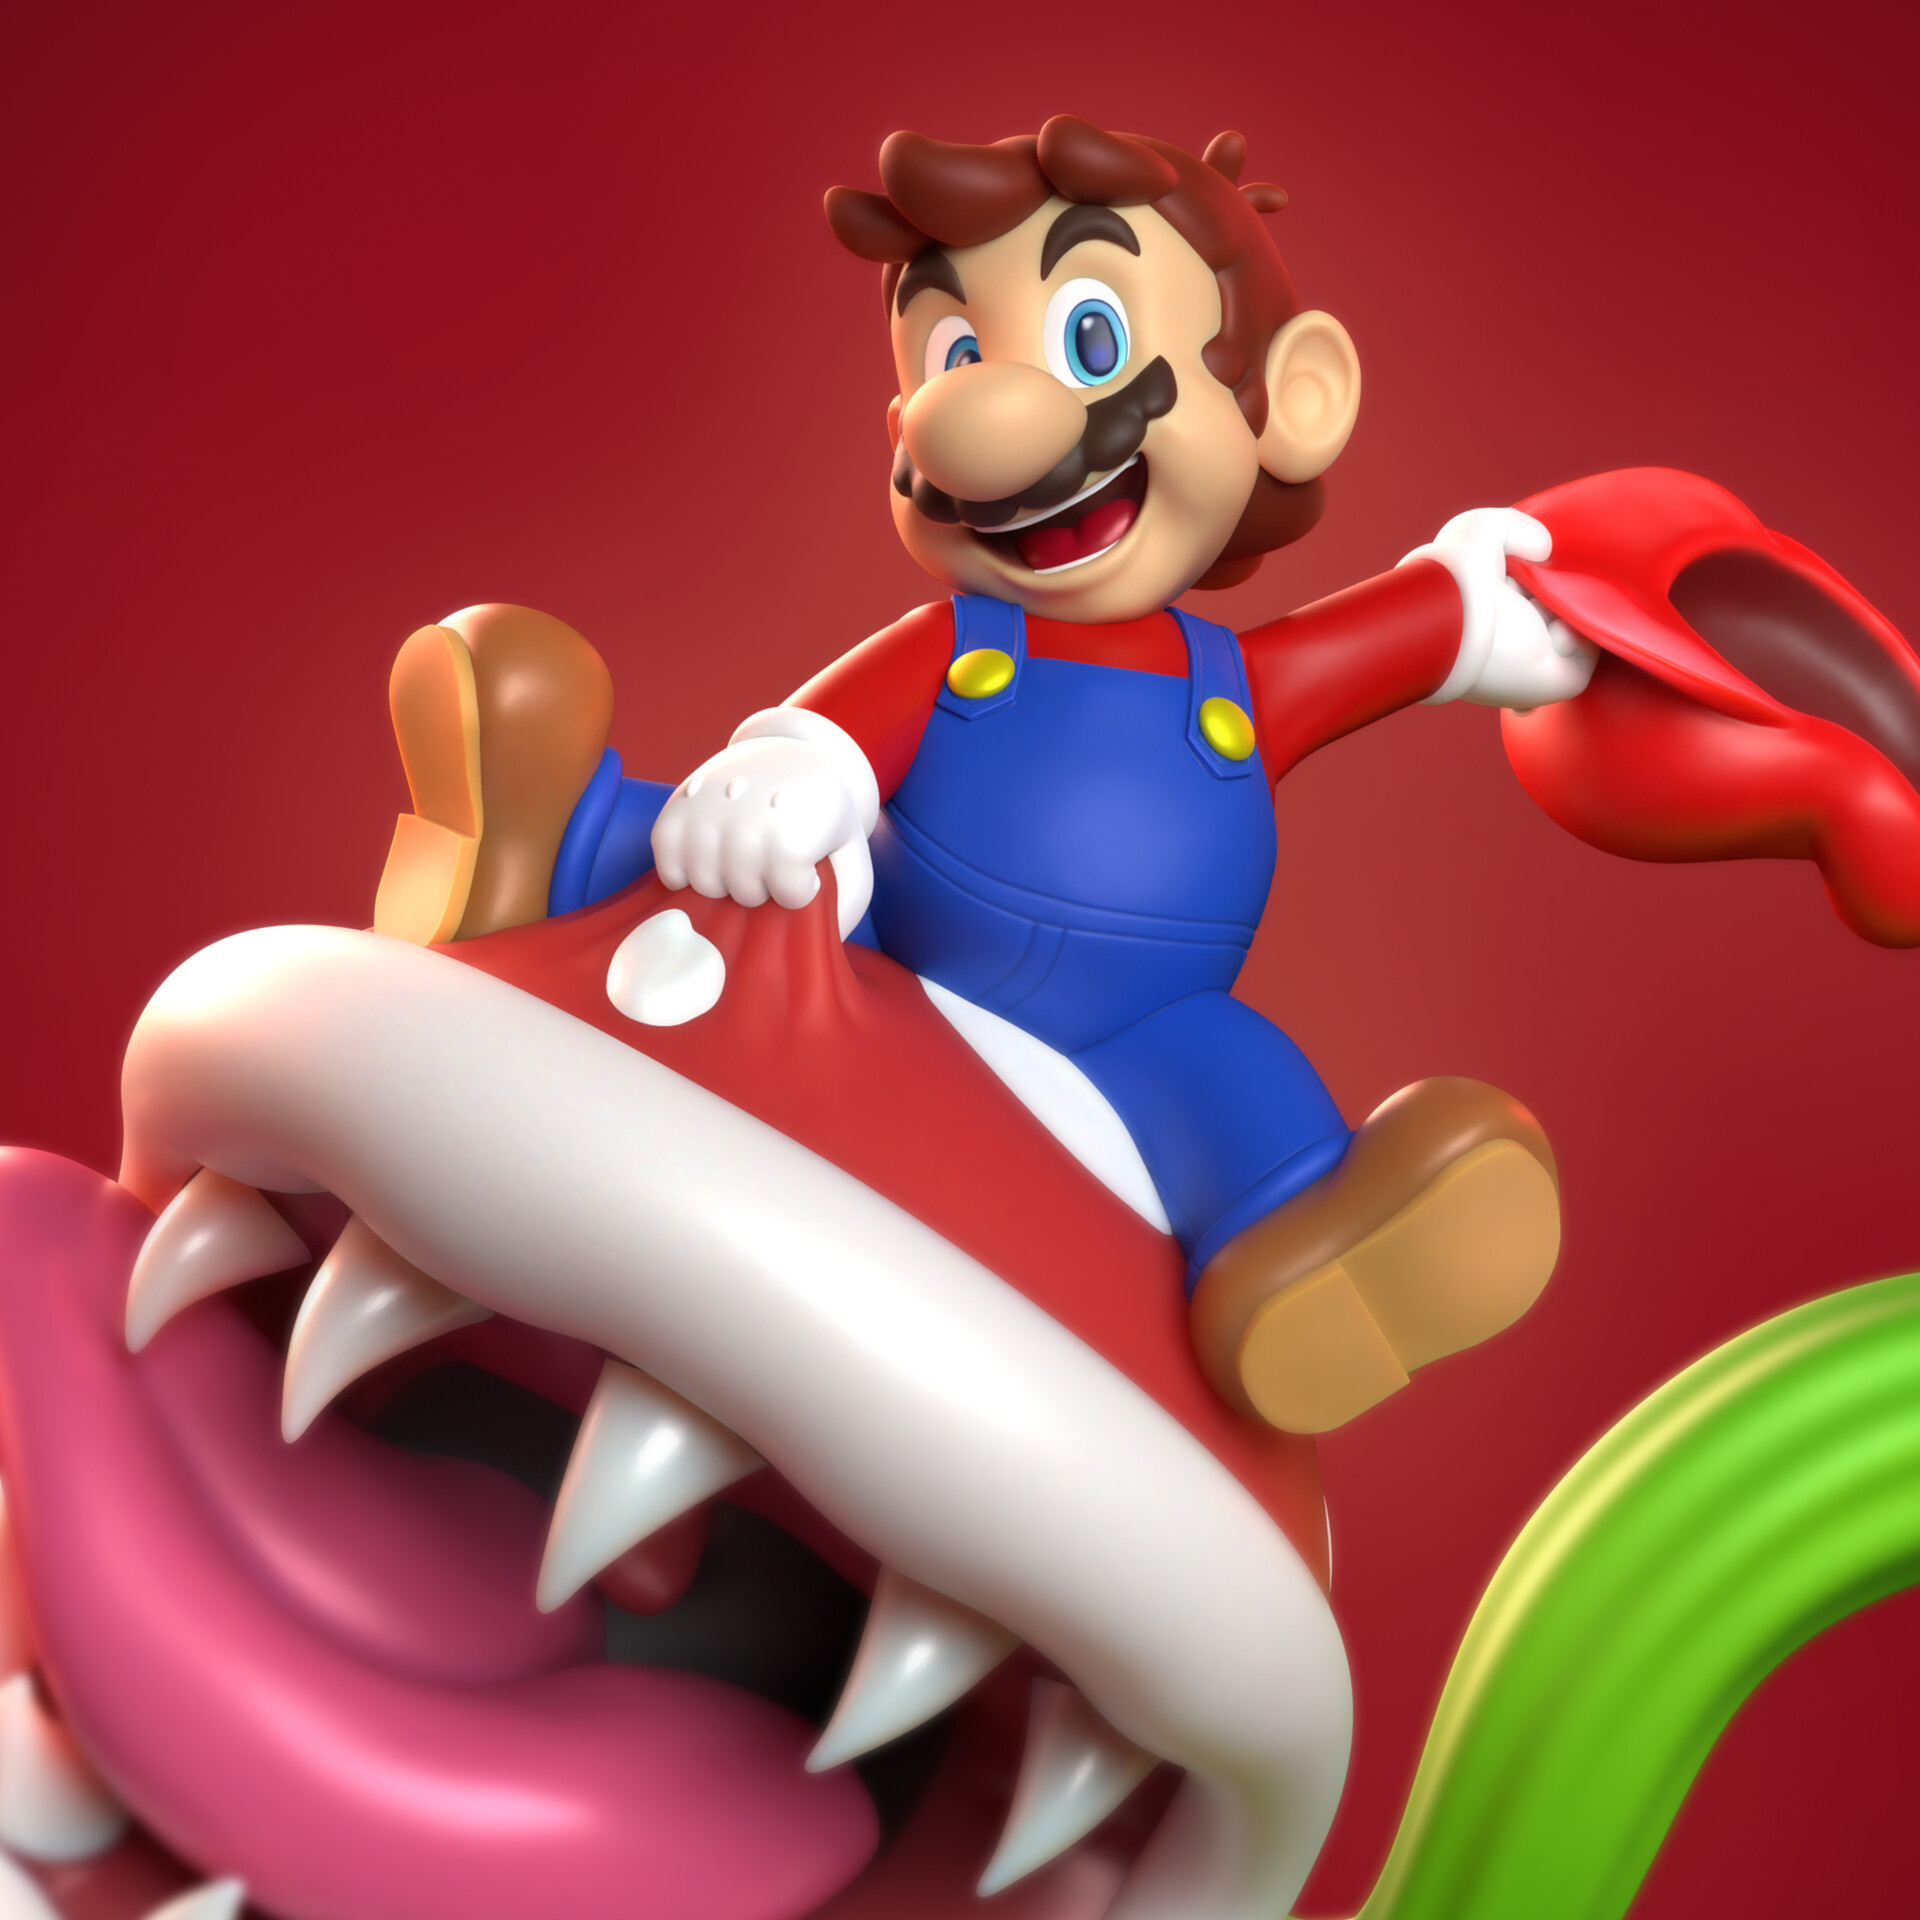 ArtStation - Bowser - Super Mario Bros